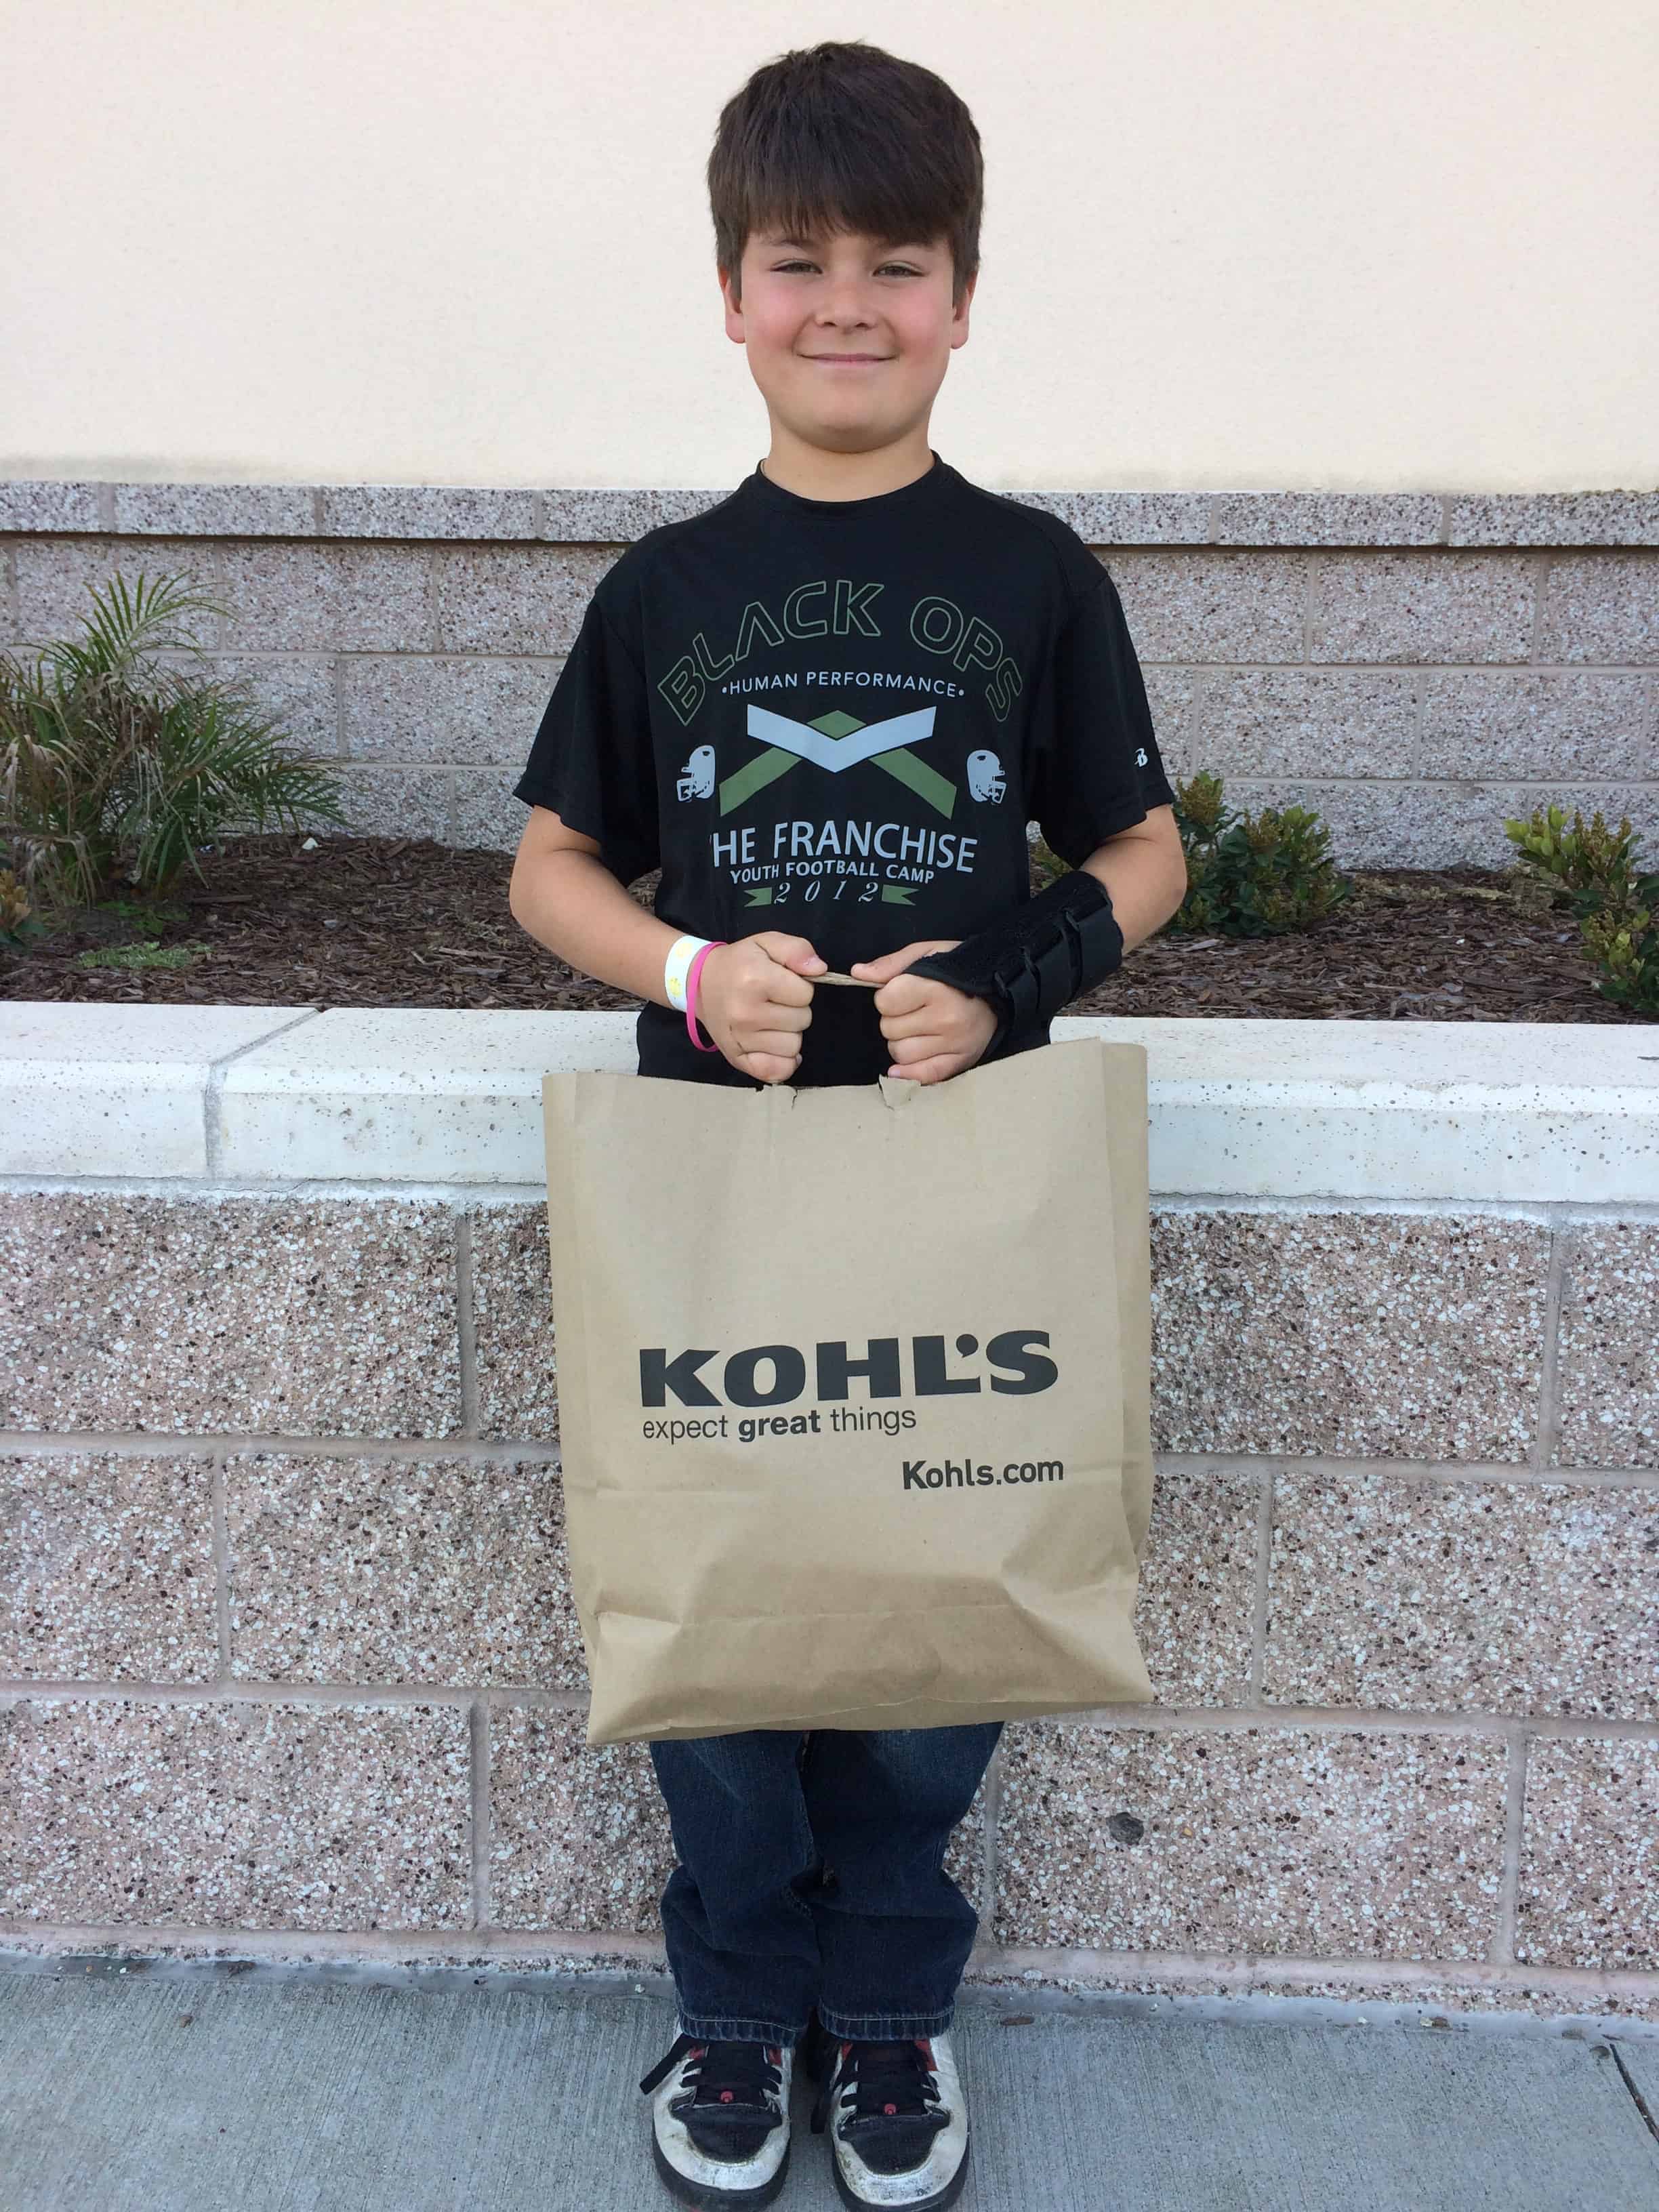 AssistanceLeague_boy with kohls shopping bag